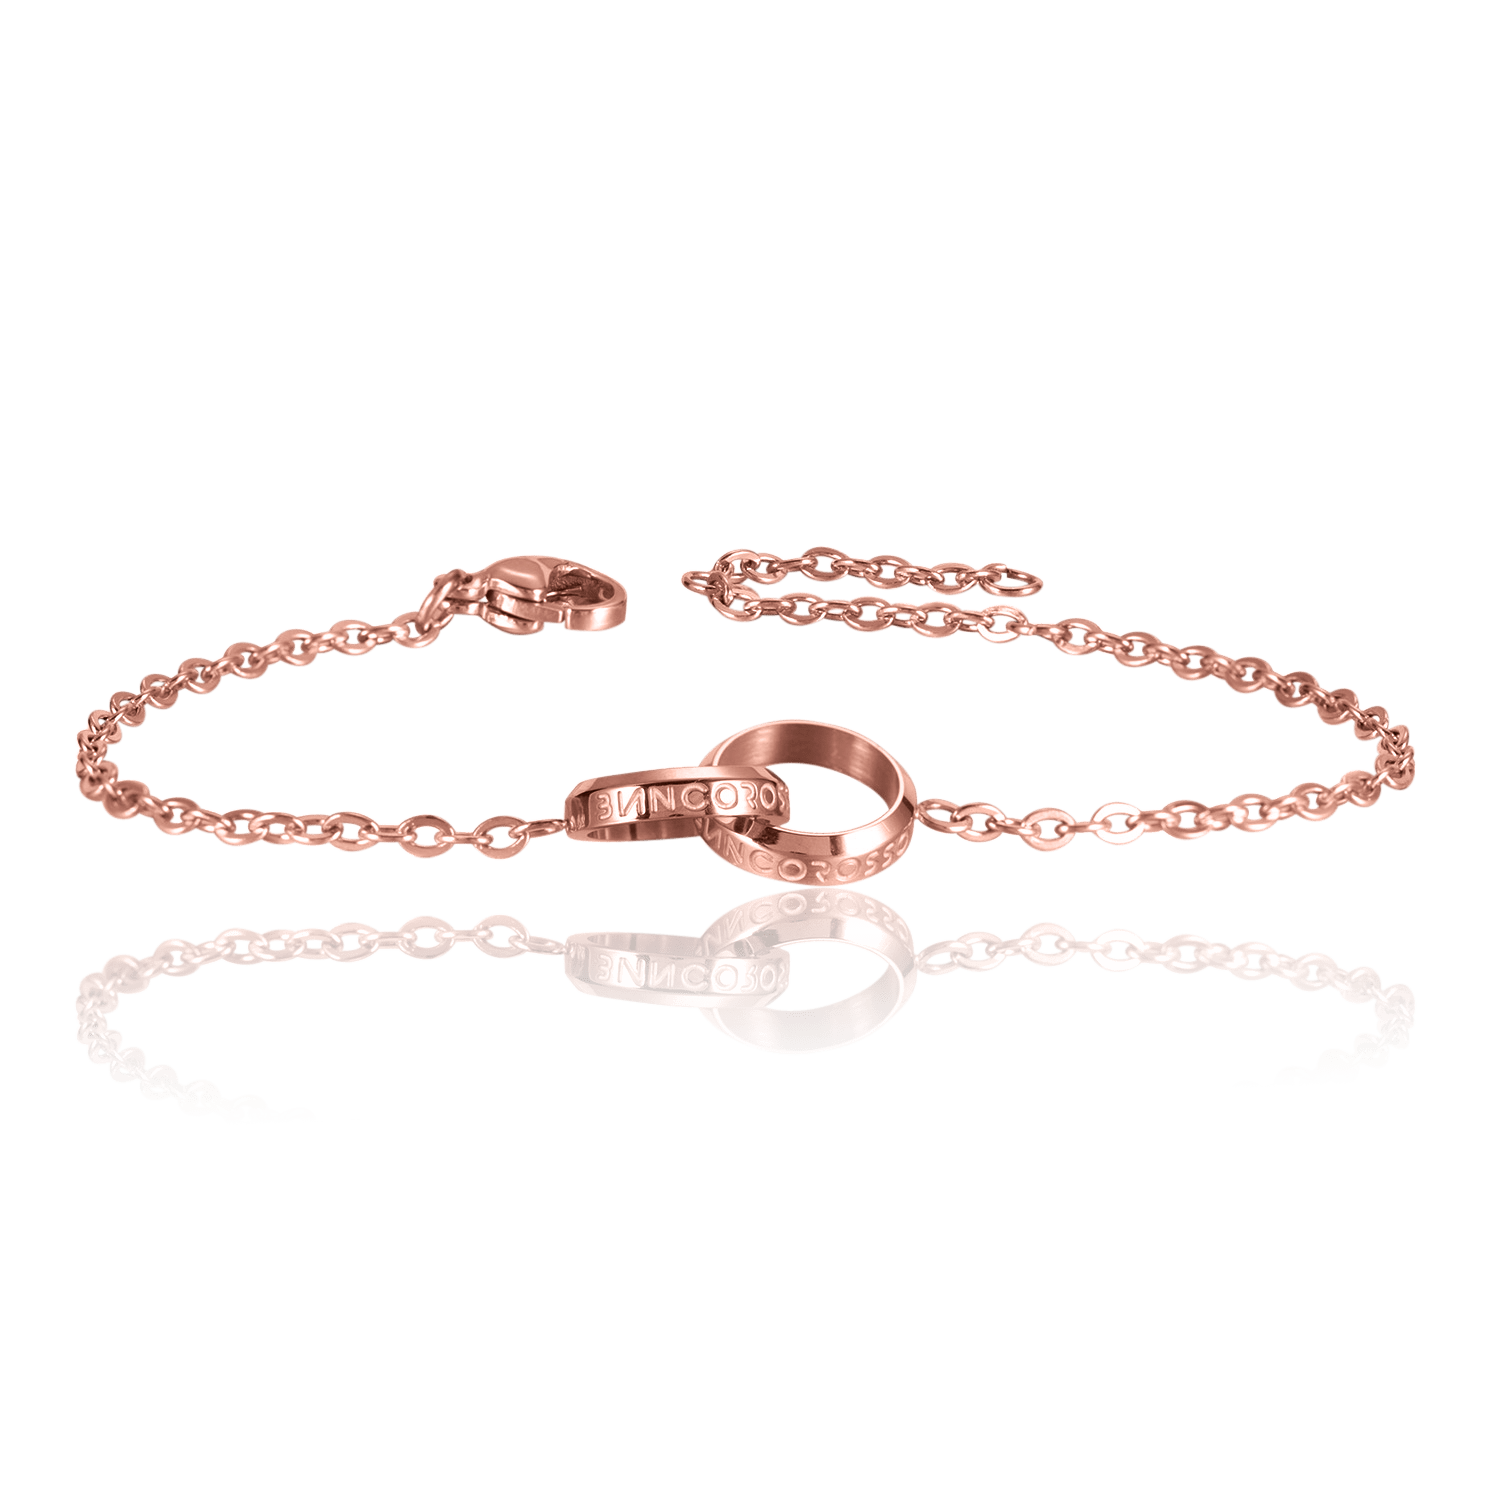 bianco rosso Bracelets To My Girlfriend - Eternity Bracelet cyprus greece jewelry gift free shipping europe worldwide